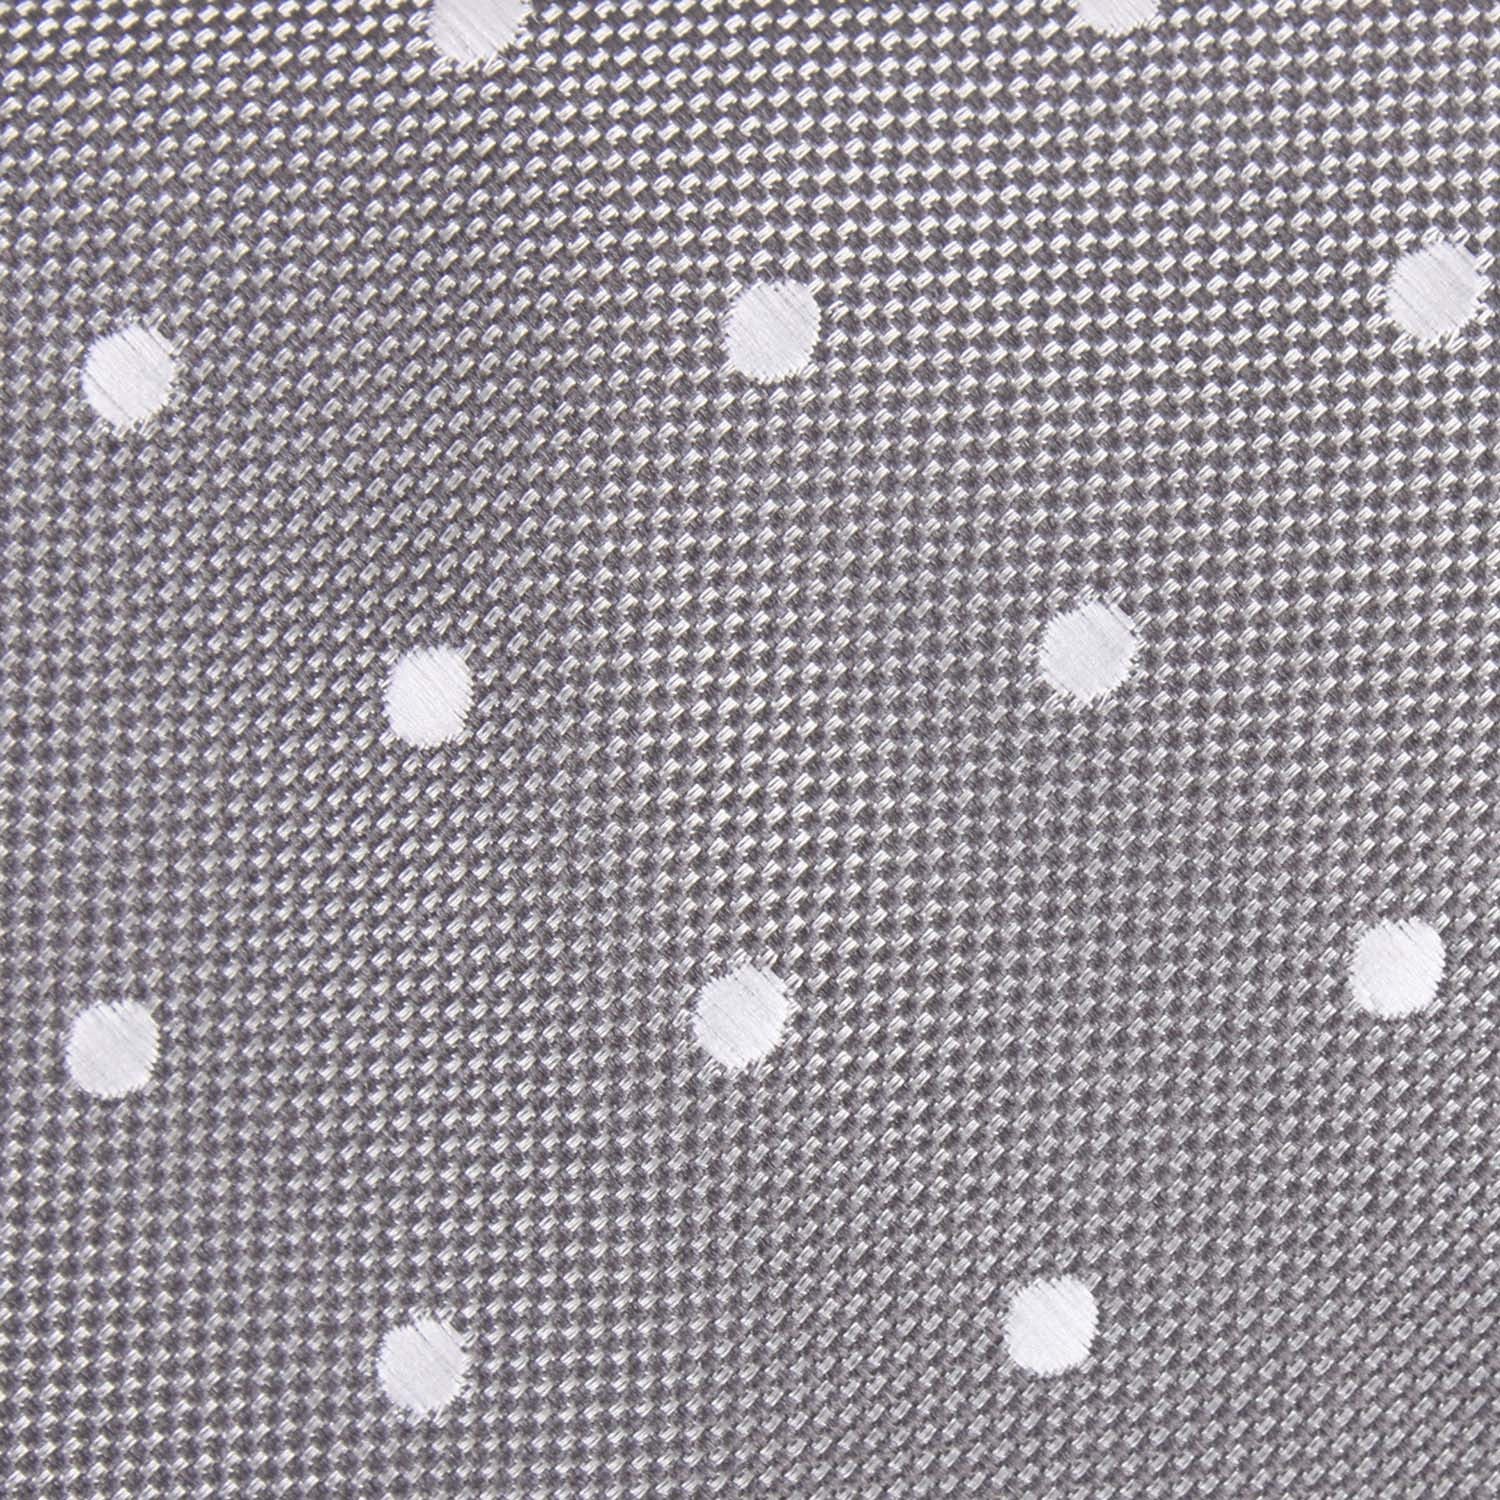 Grey with Milky White Polka Dots Fabric Self Tie Diamond Tip Bow TieM120